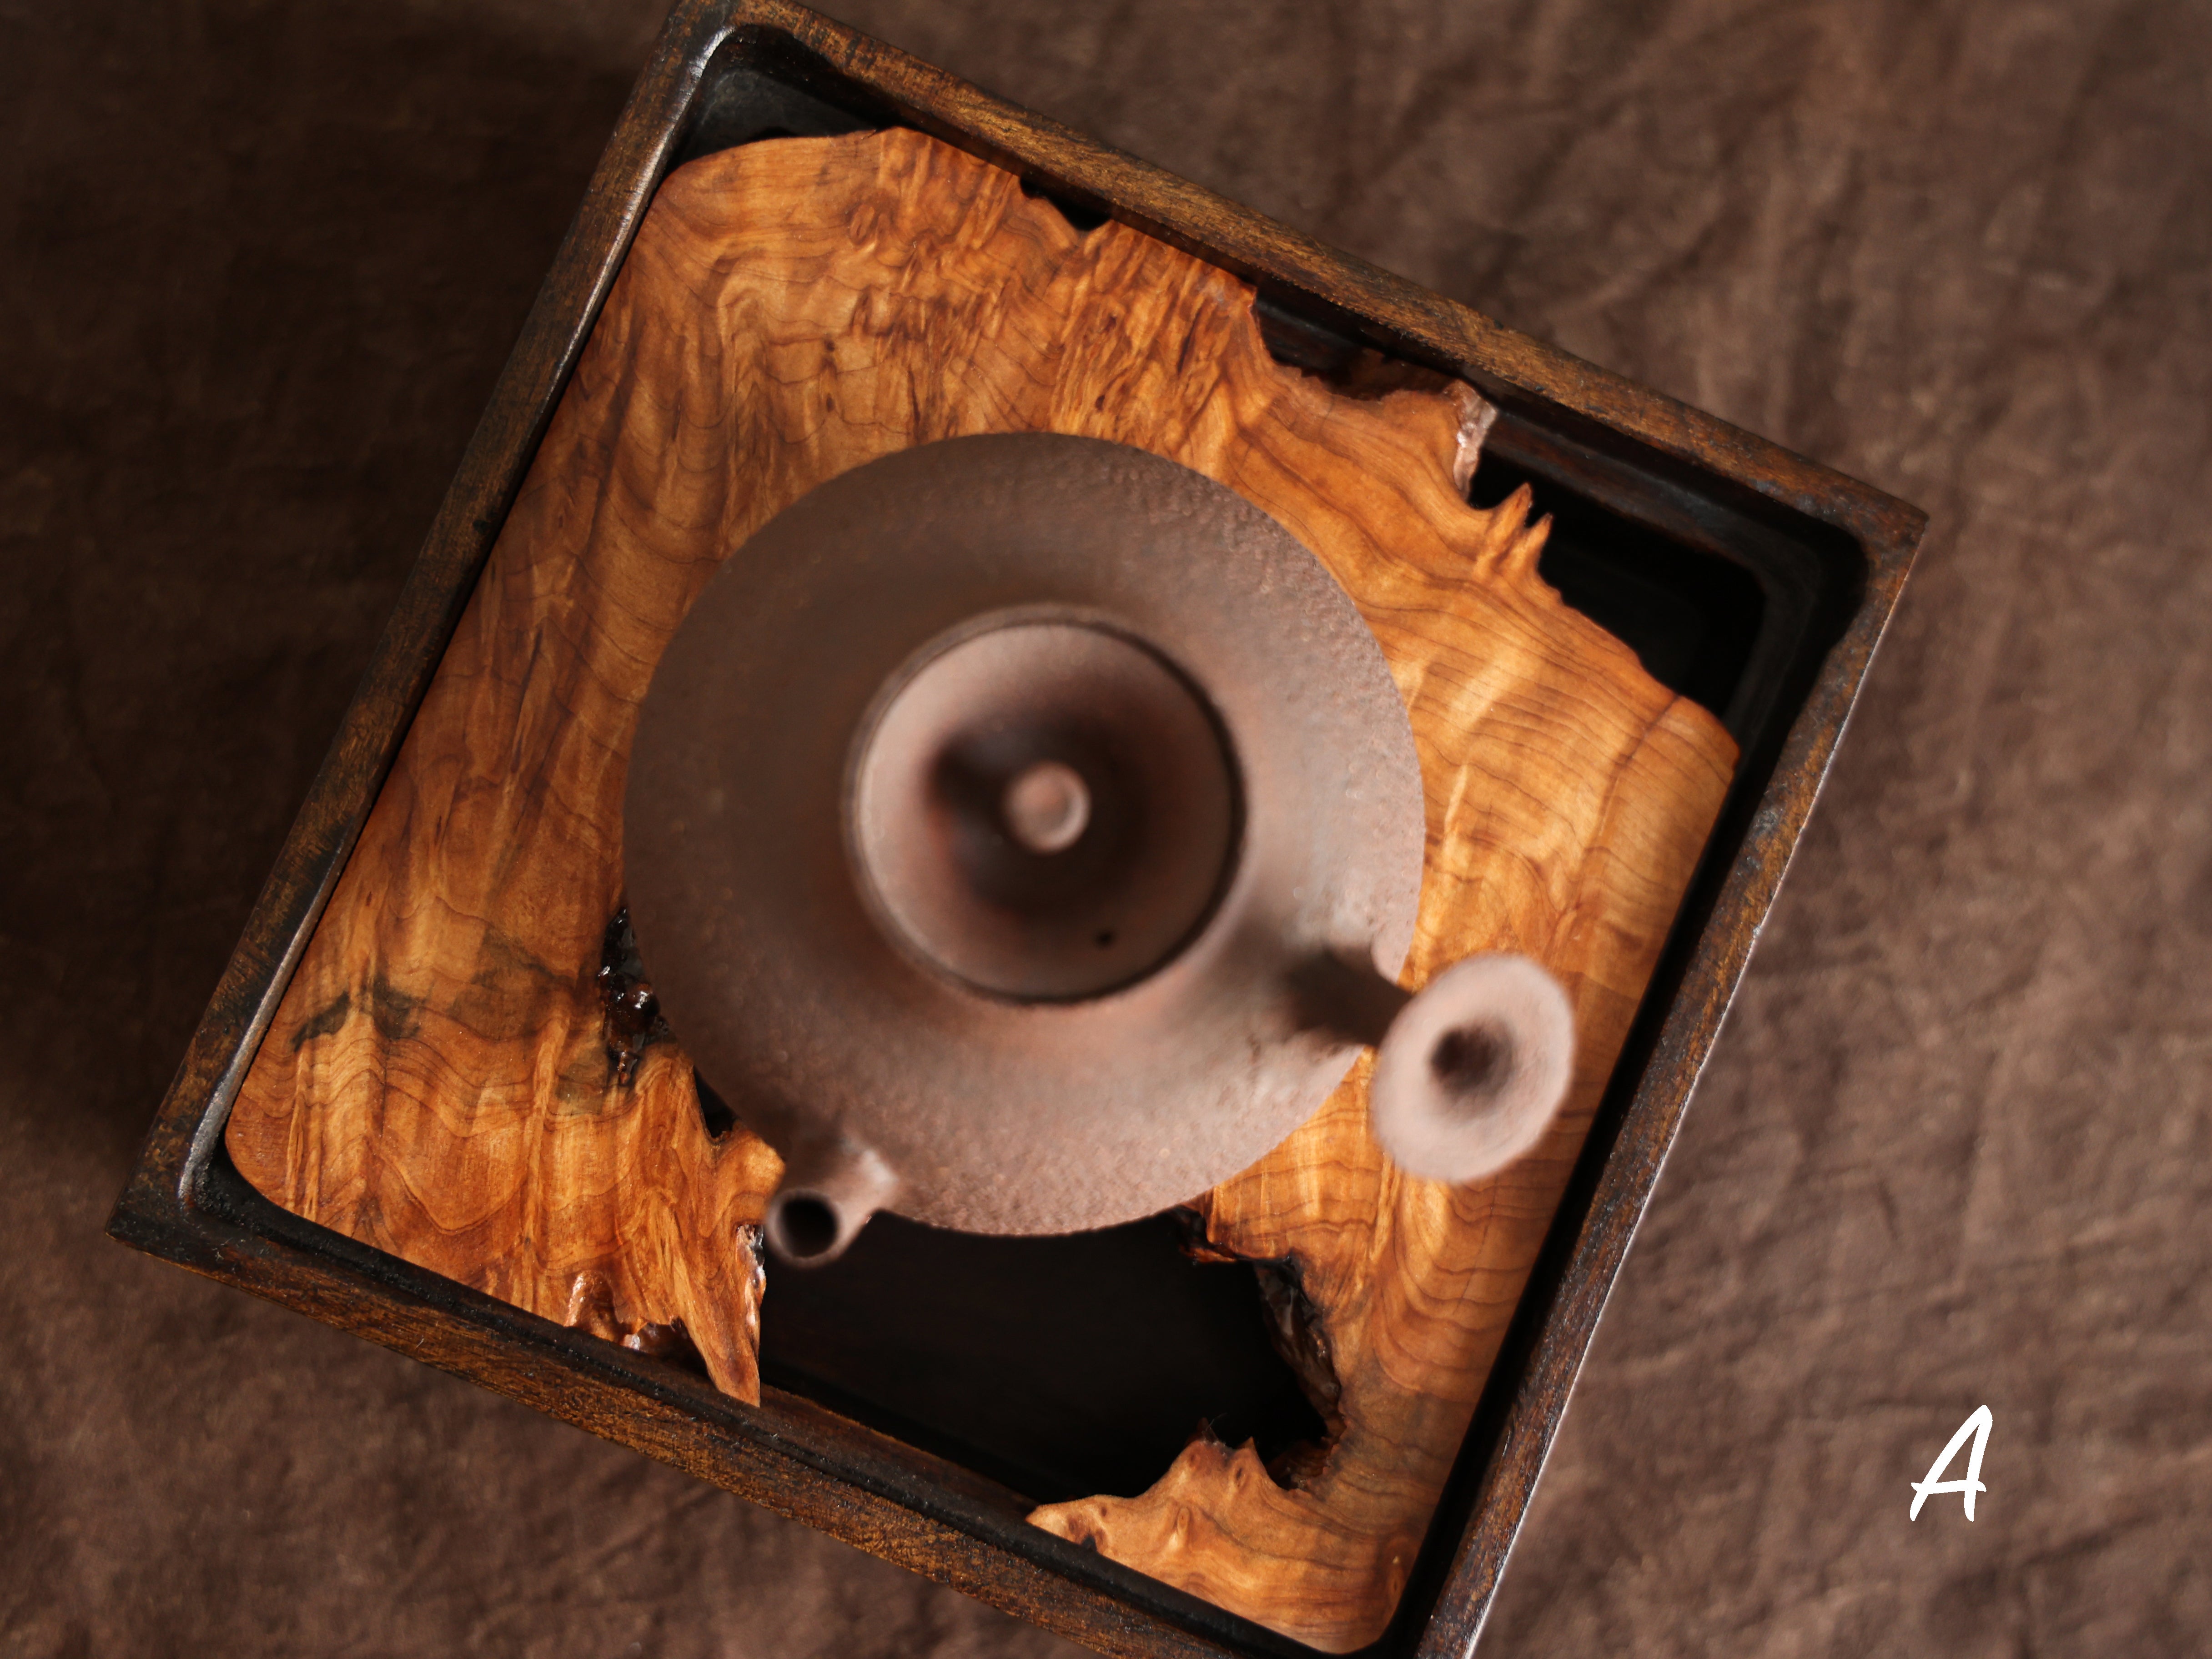 Wabisabi Wooden Teapot Supprt (S)